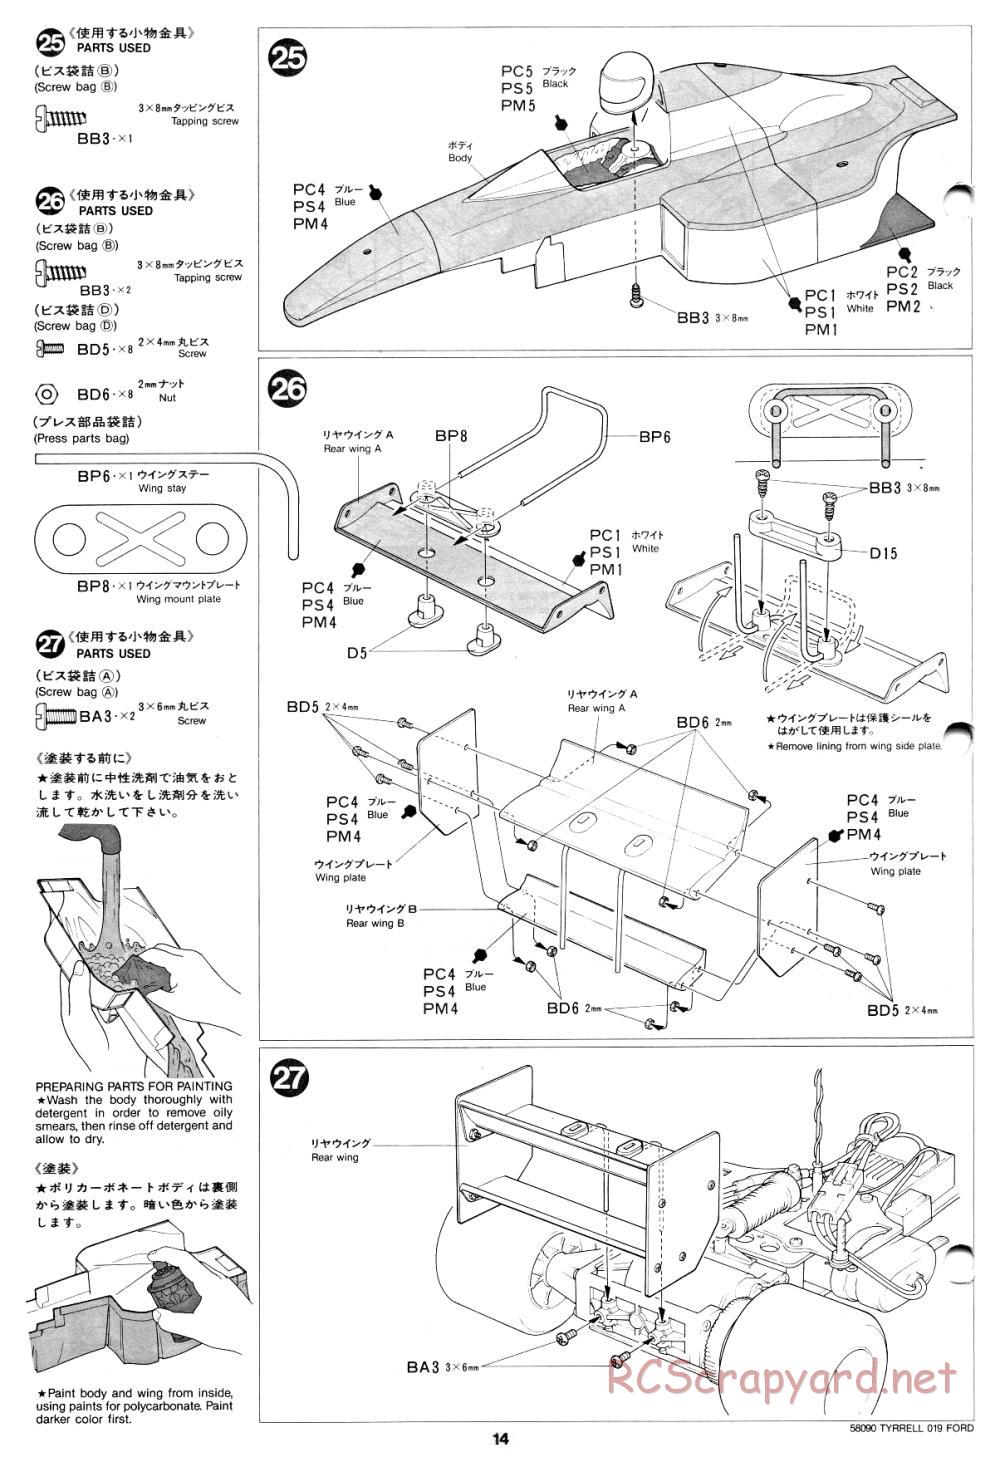 Tamiya - Tyrrell 019 Ford - 58090 - Manual - Page 14